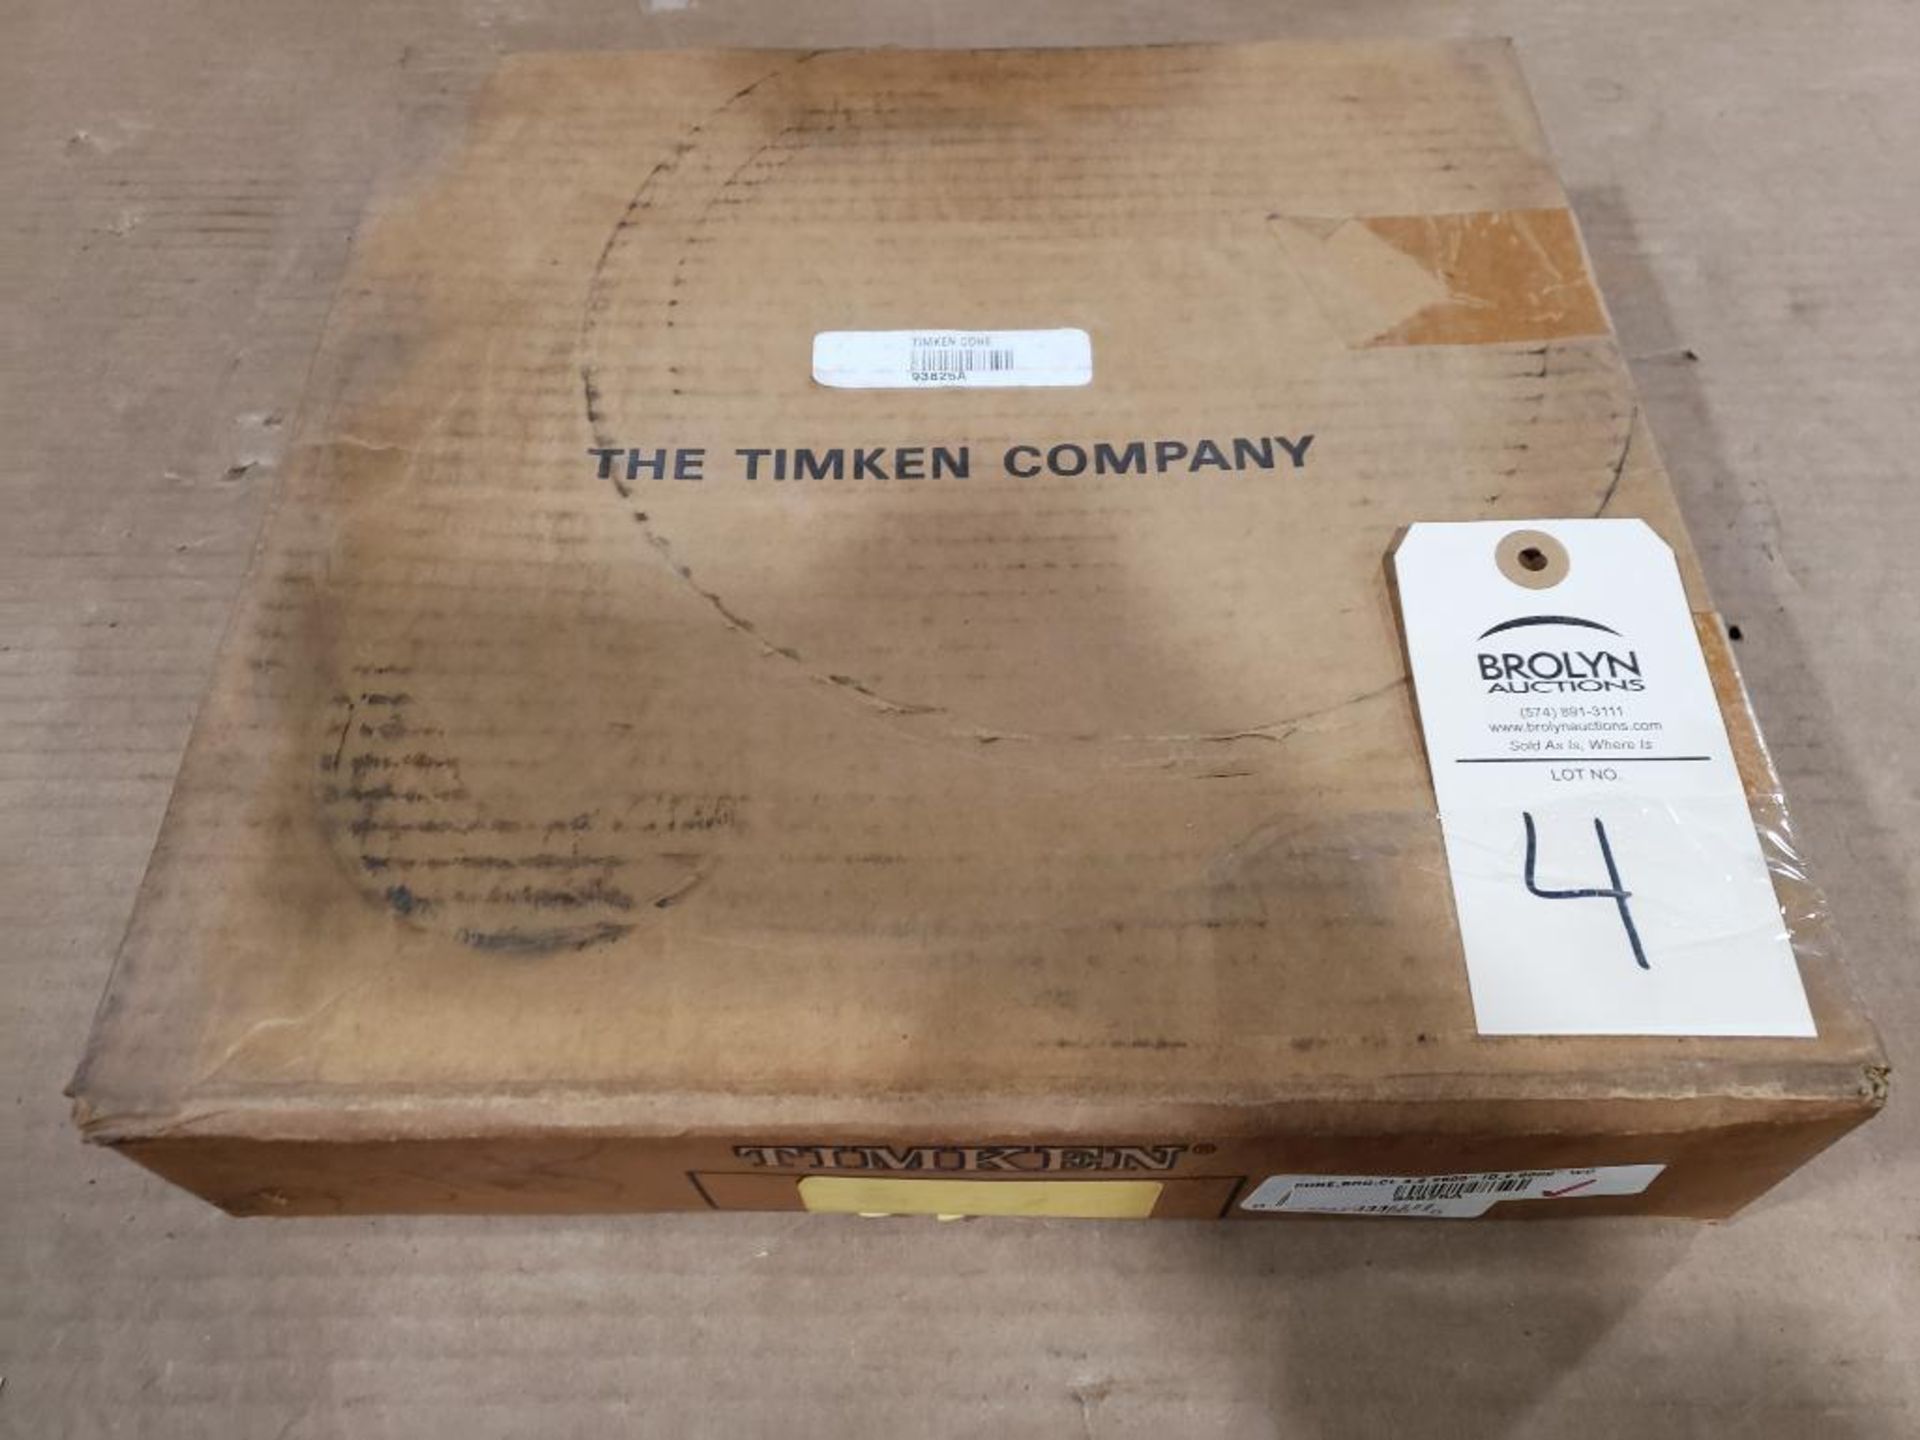 Timken bearing. Part number 93825A.